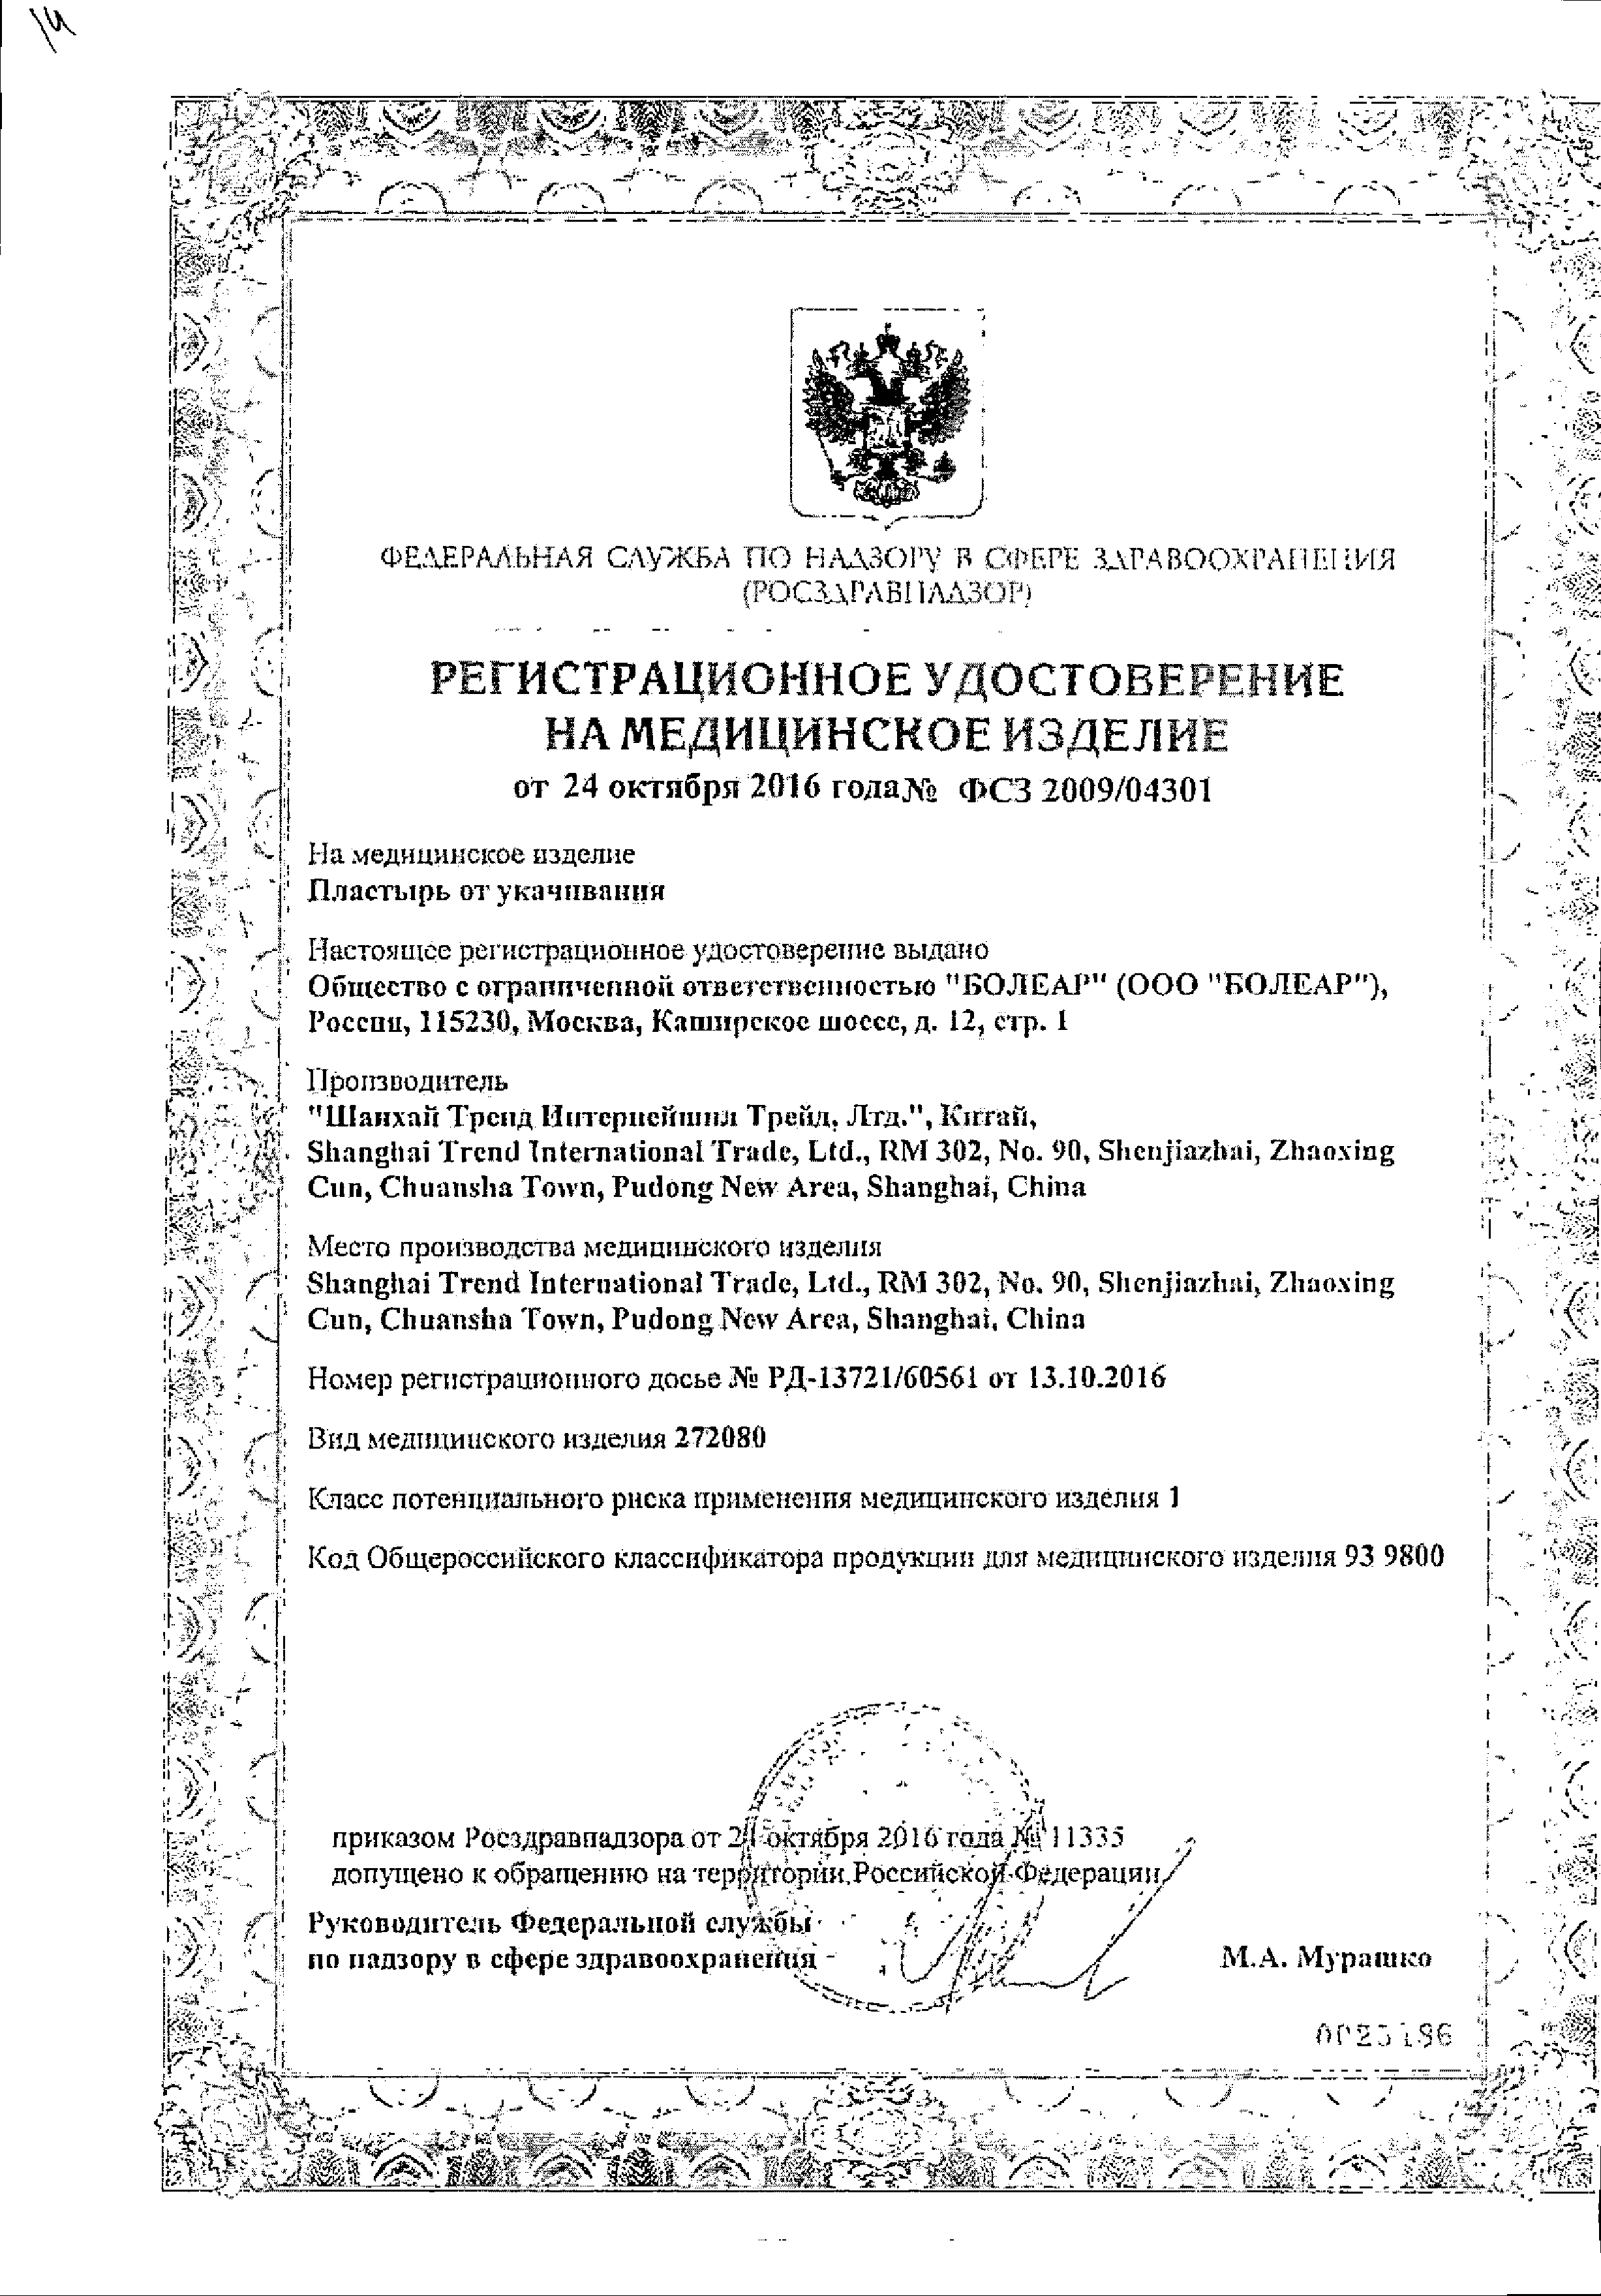 Extraplast Пластырь от укачивания сертификат